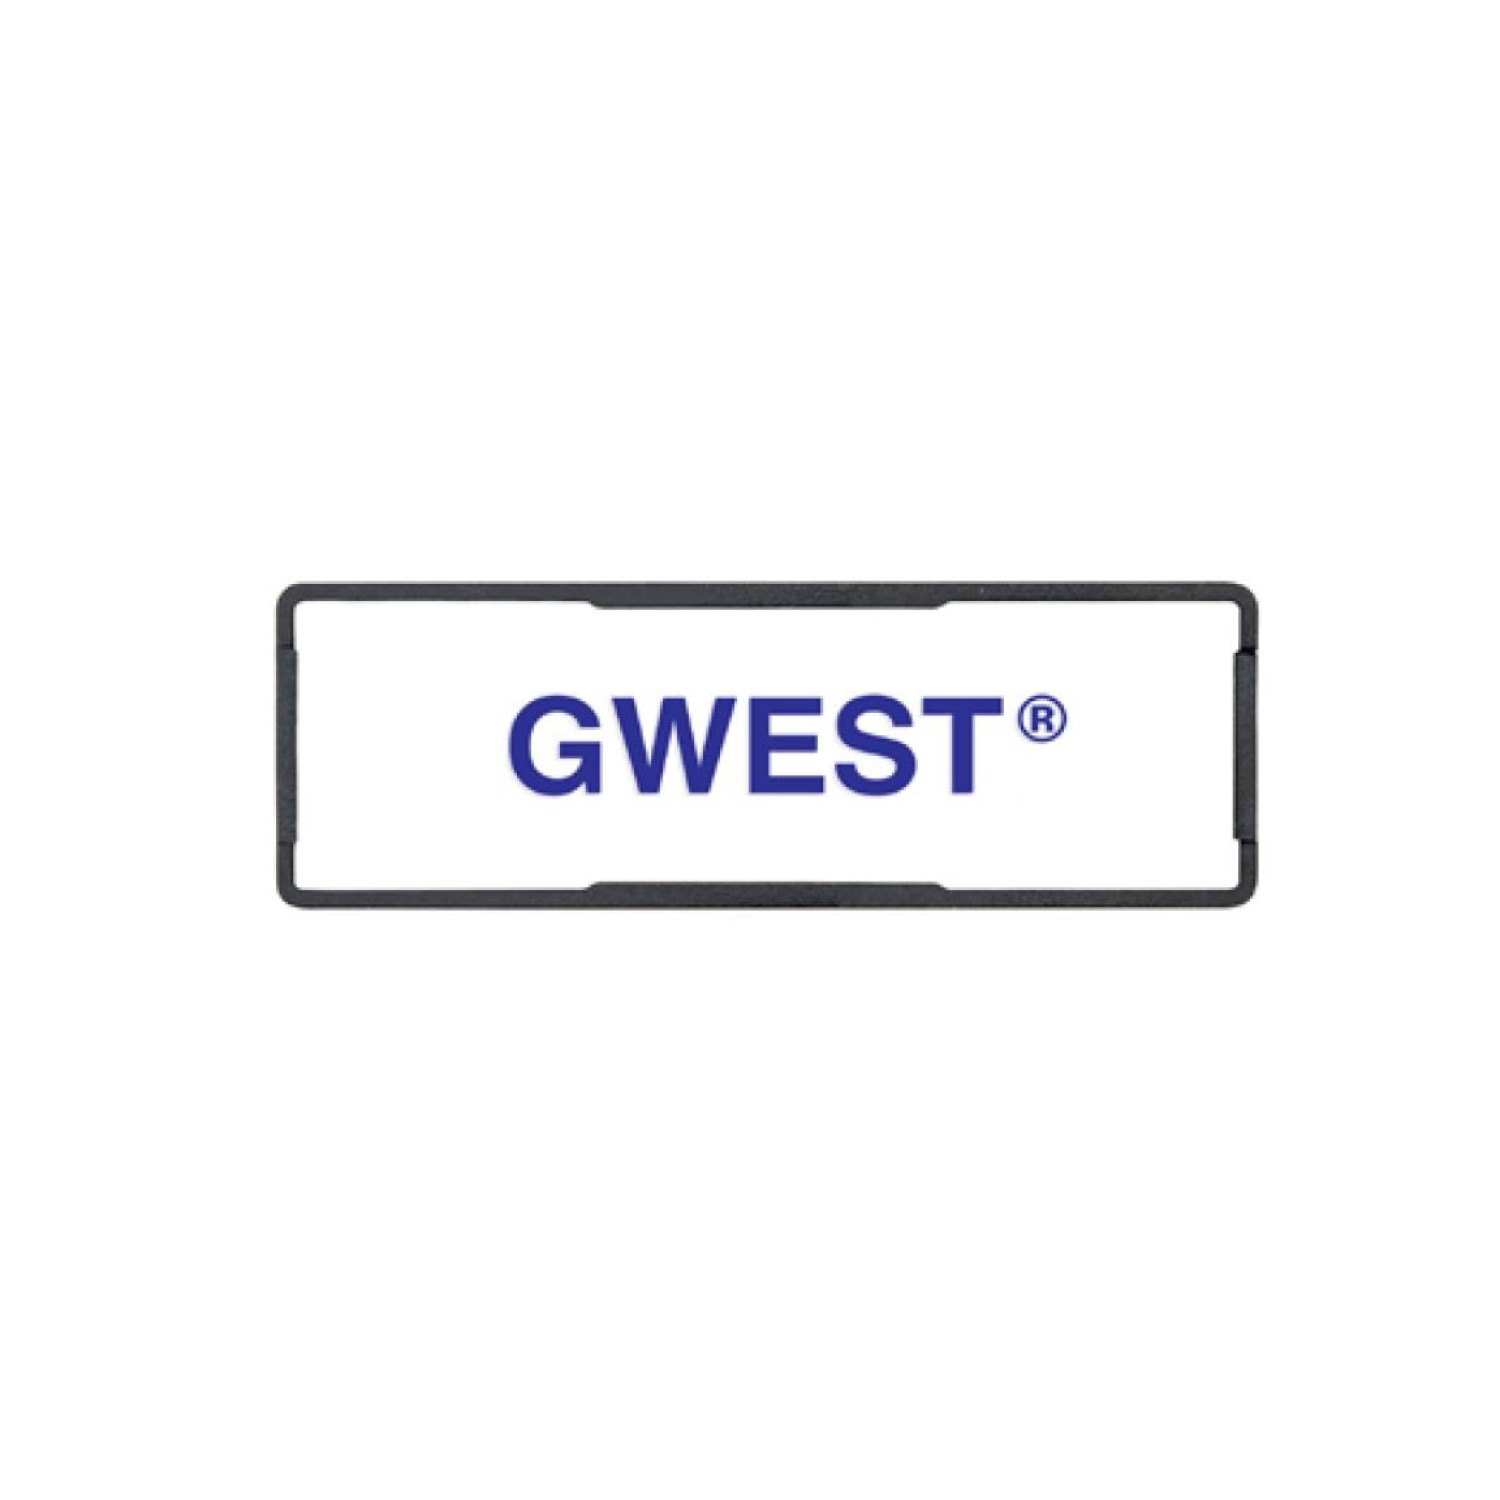 Gwest Pano Etiketi - GPET 2 - 5 Adet